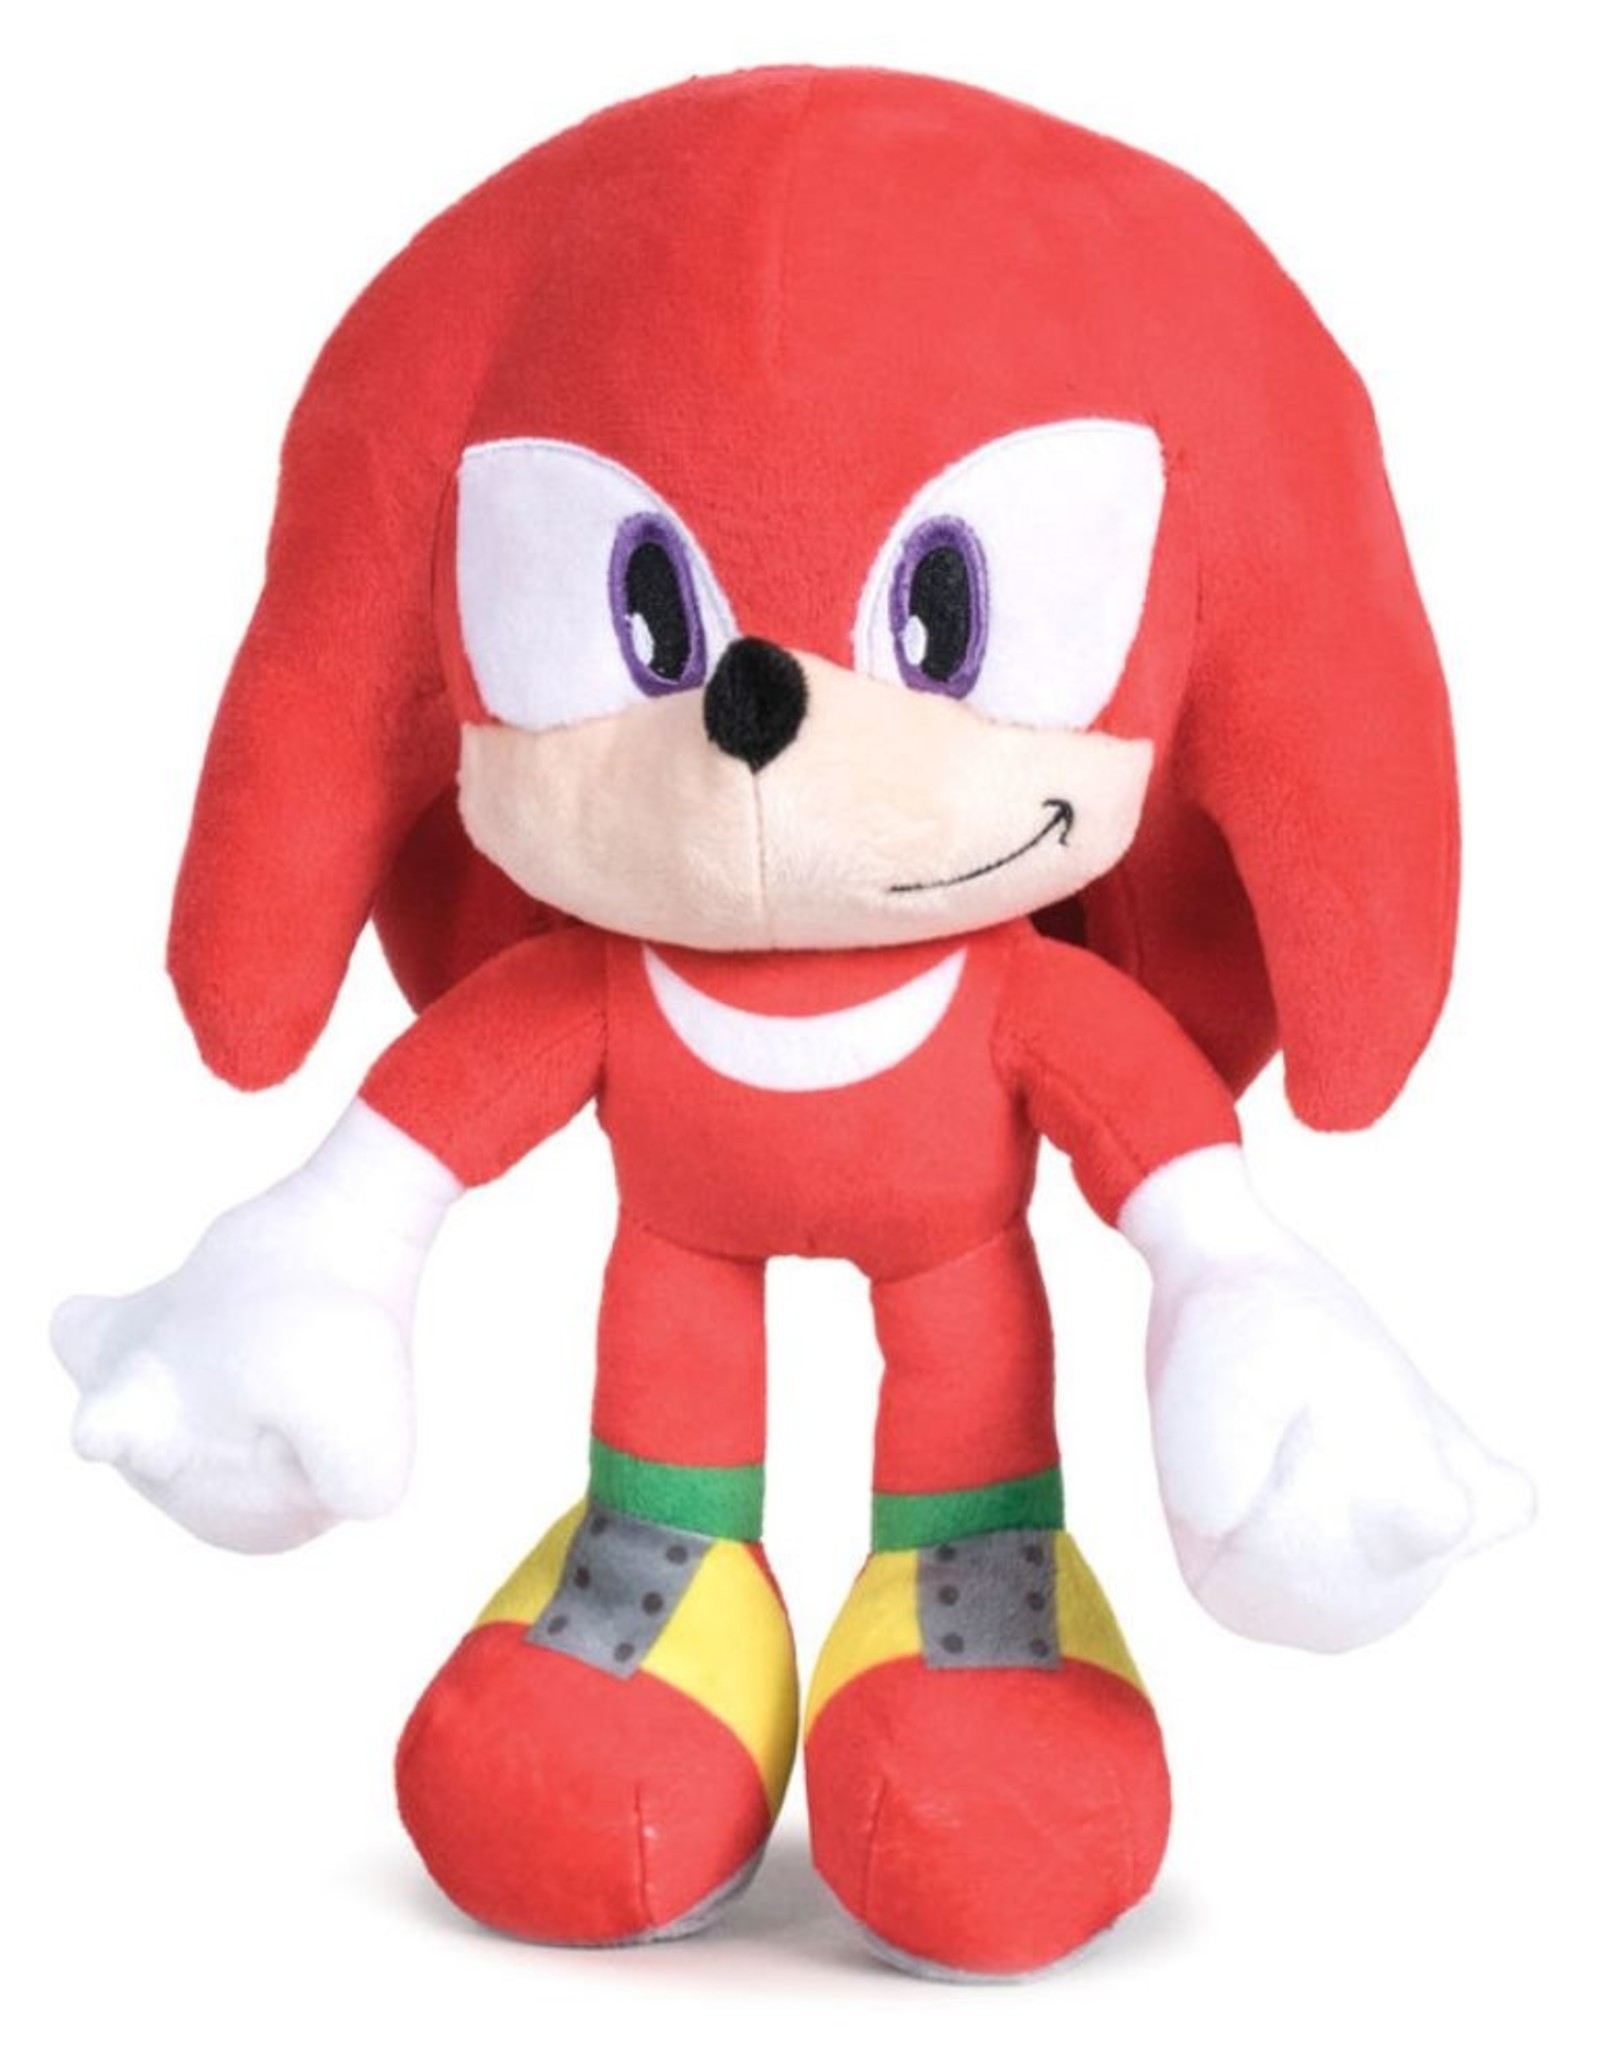 Sega Merchandise plush and figurines - Sonic - Knuckles the Hedgehog plush toy 25cm